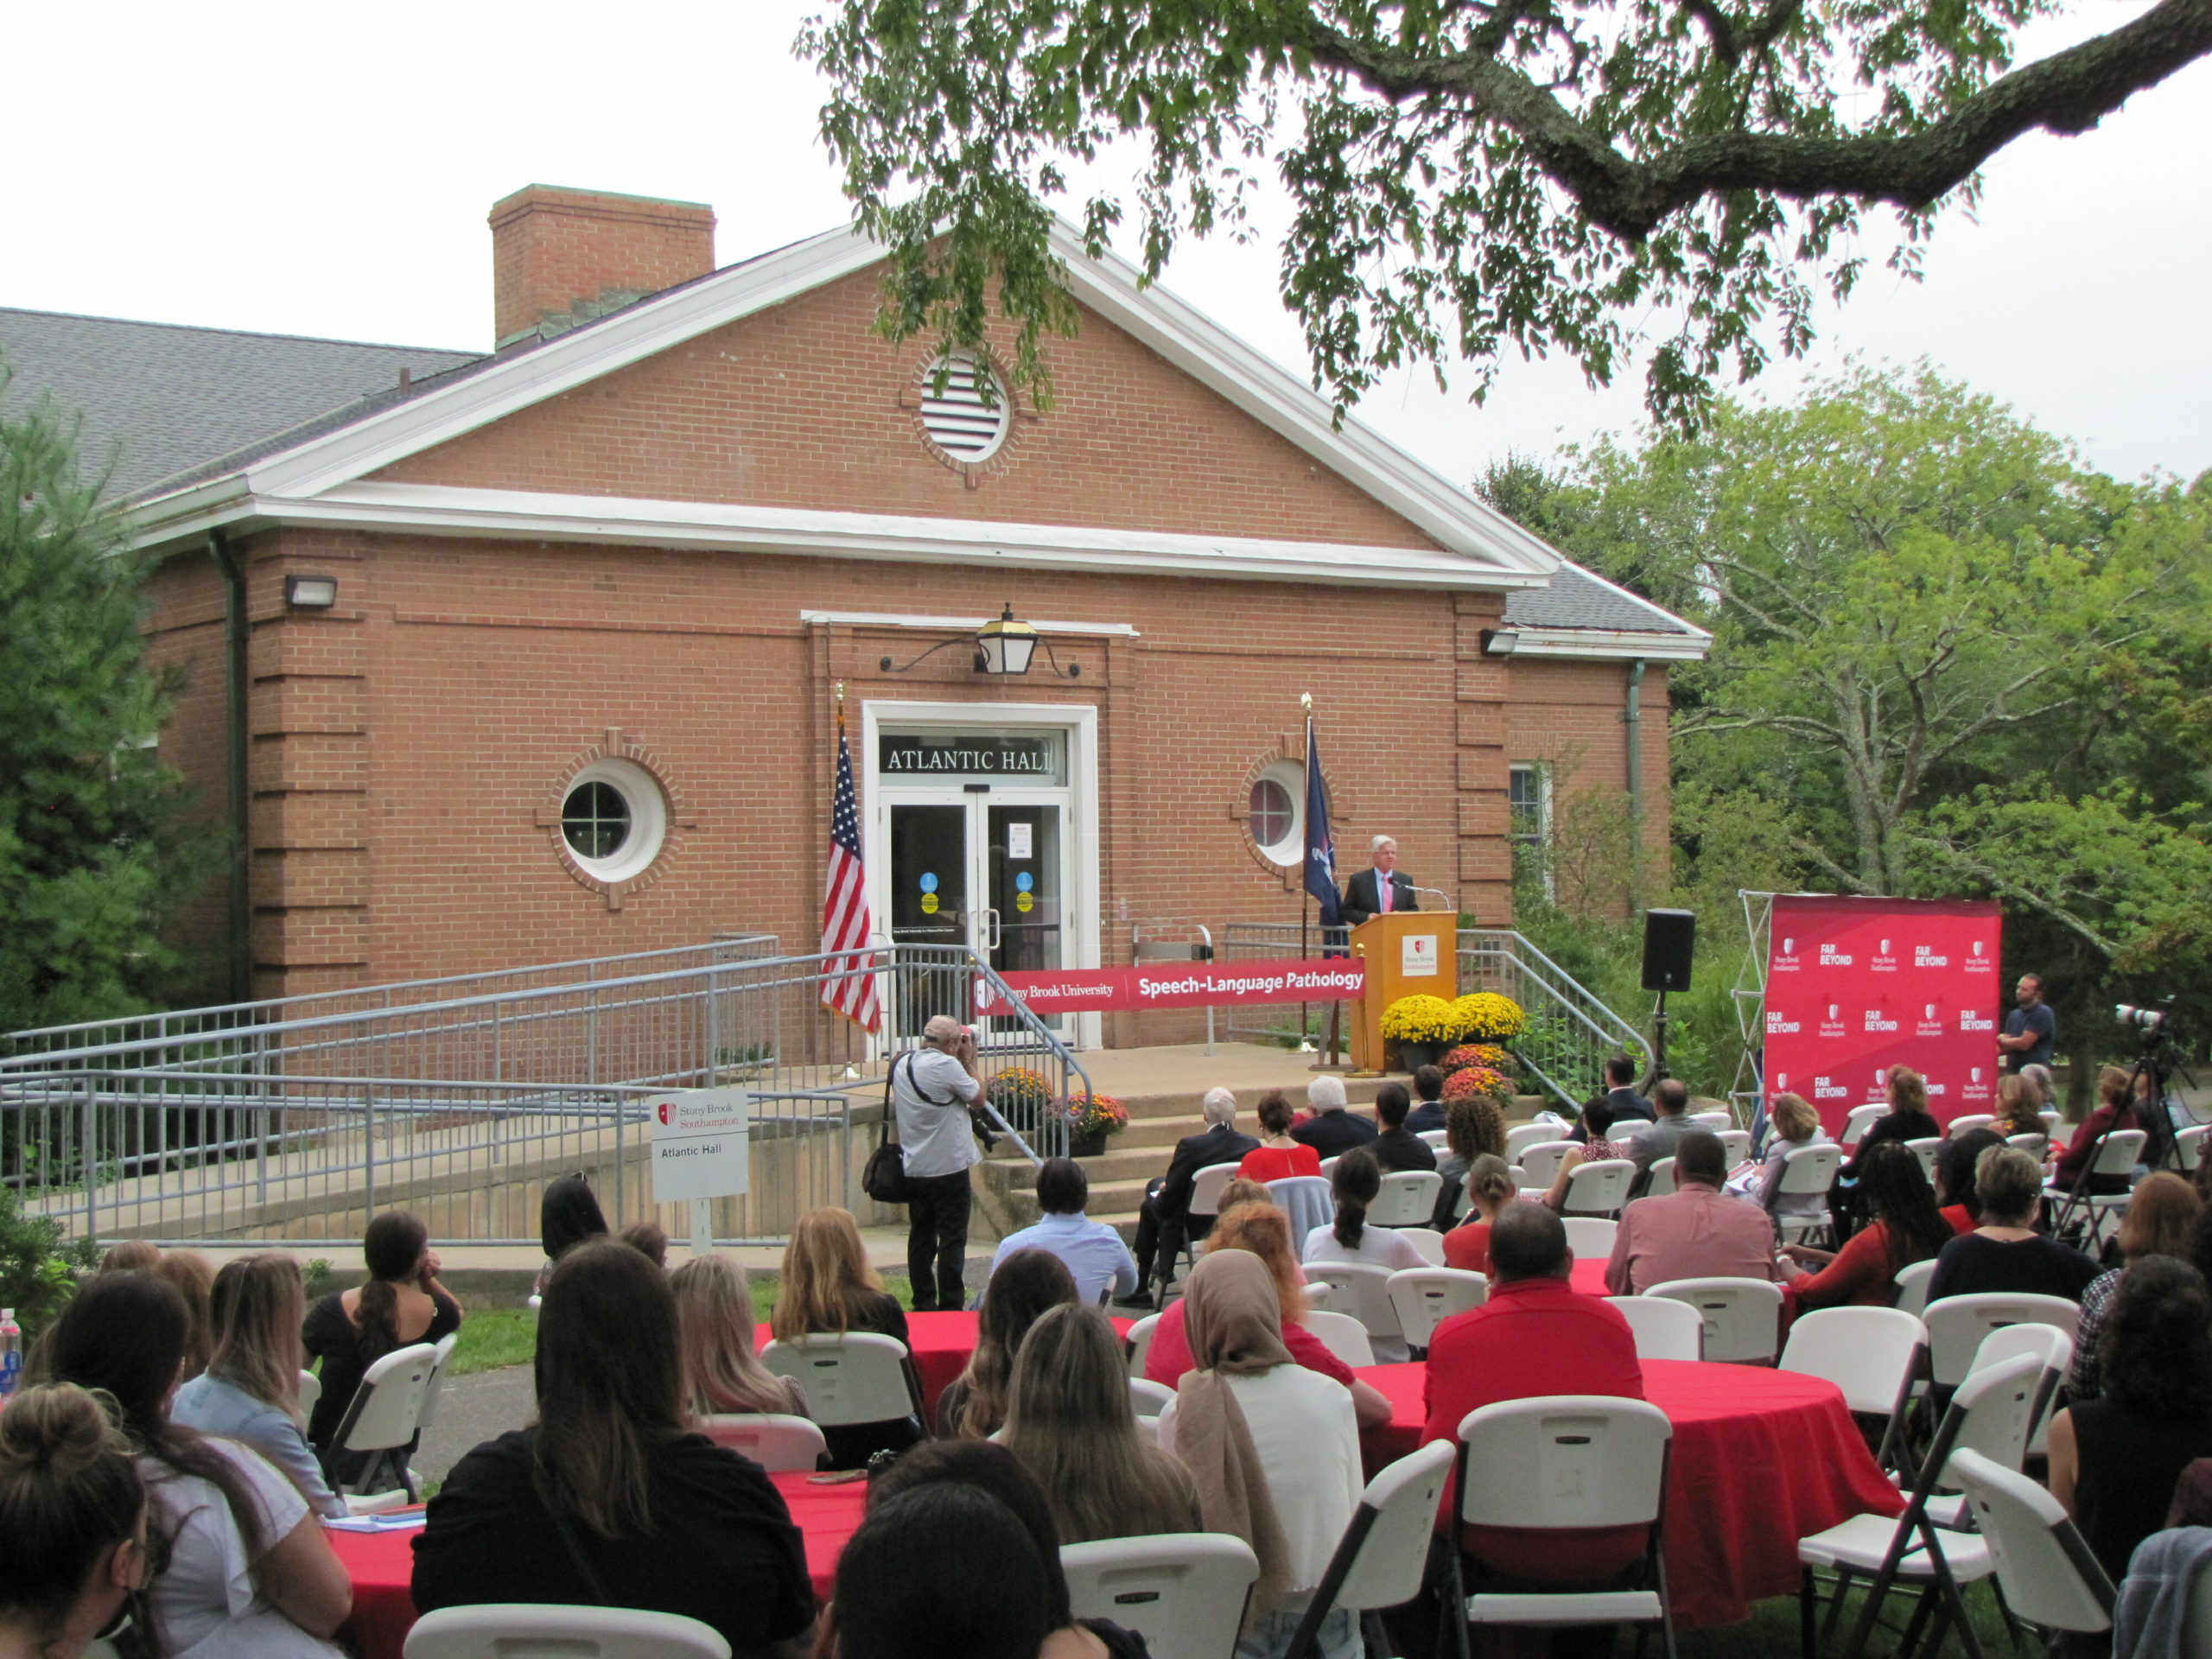 Stony Brook University officially opened its Speech-Language Patholgy Program's new center in the Atlantic Building at the Stony Brook Southampton campus on Friday.